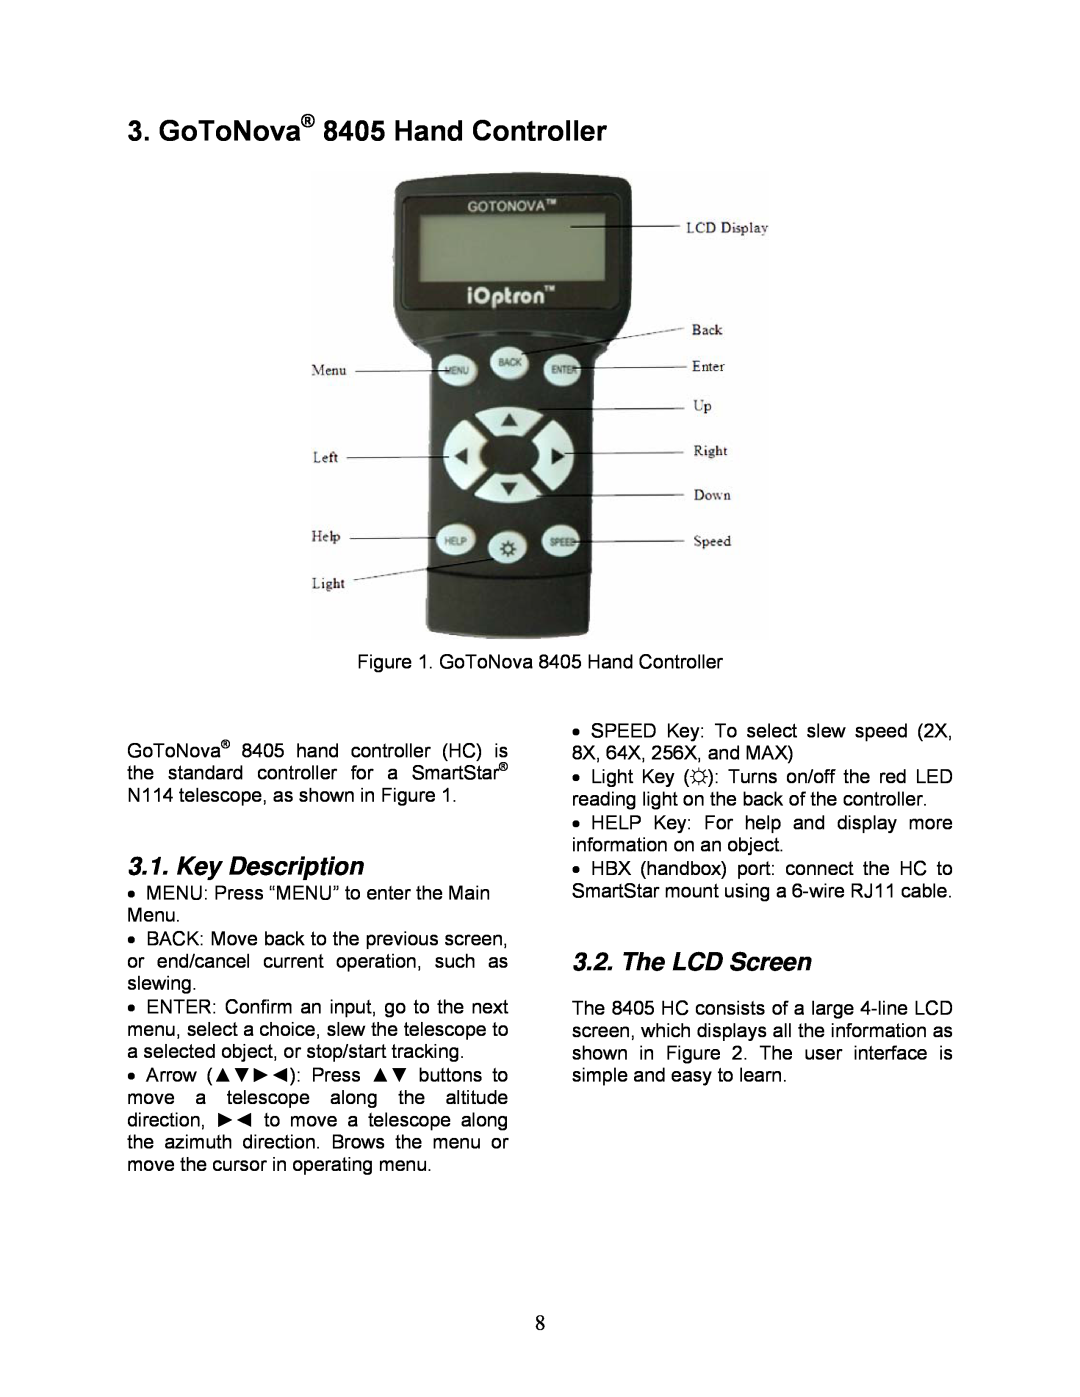 iOptron N114 instruction manual GoToNova 8405 Hand Controller, Key Description, The LCD Screen 